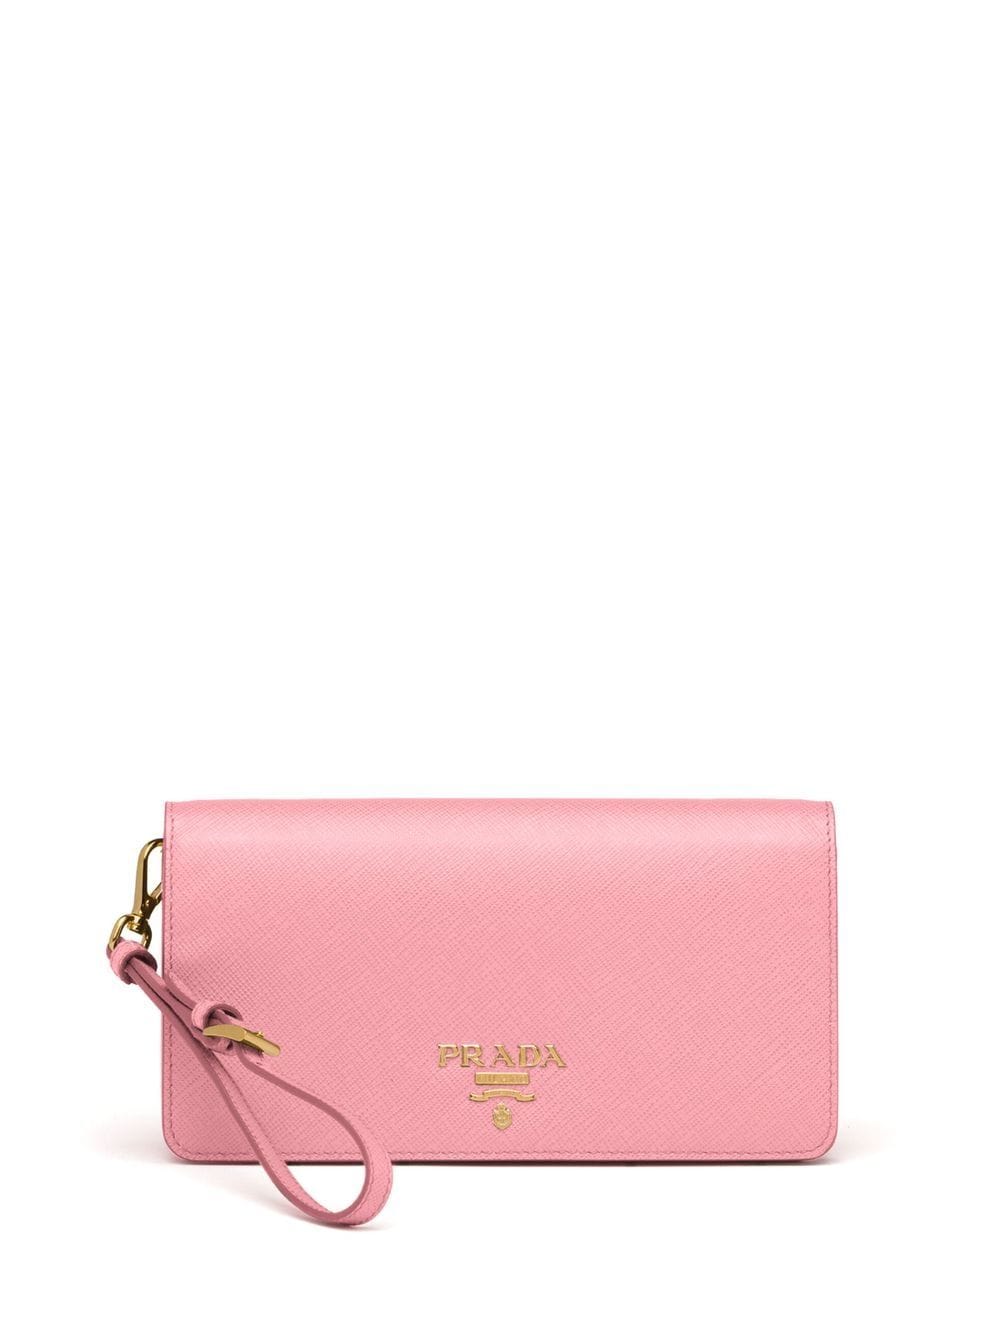 Prada Saffiano Leather Mini-bag in Pink